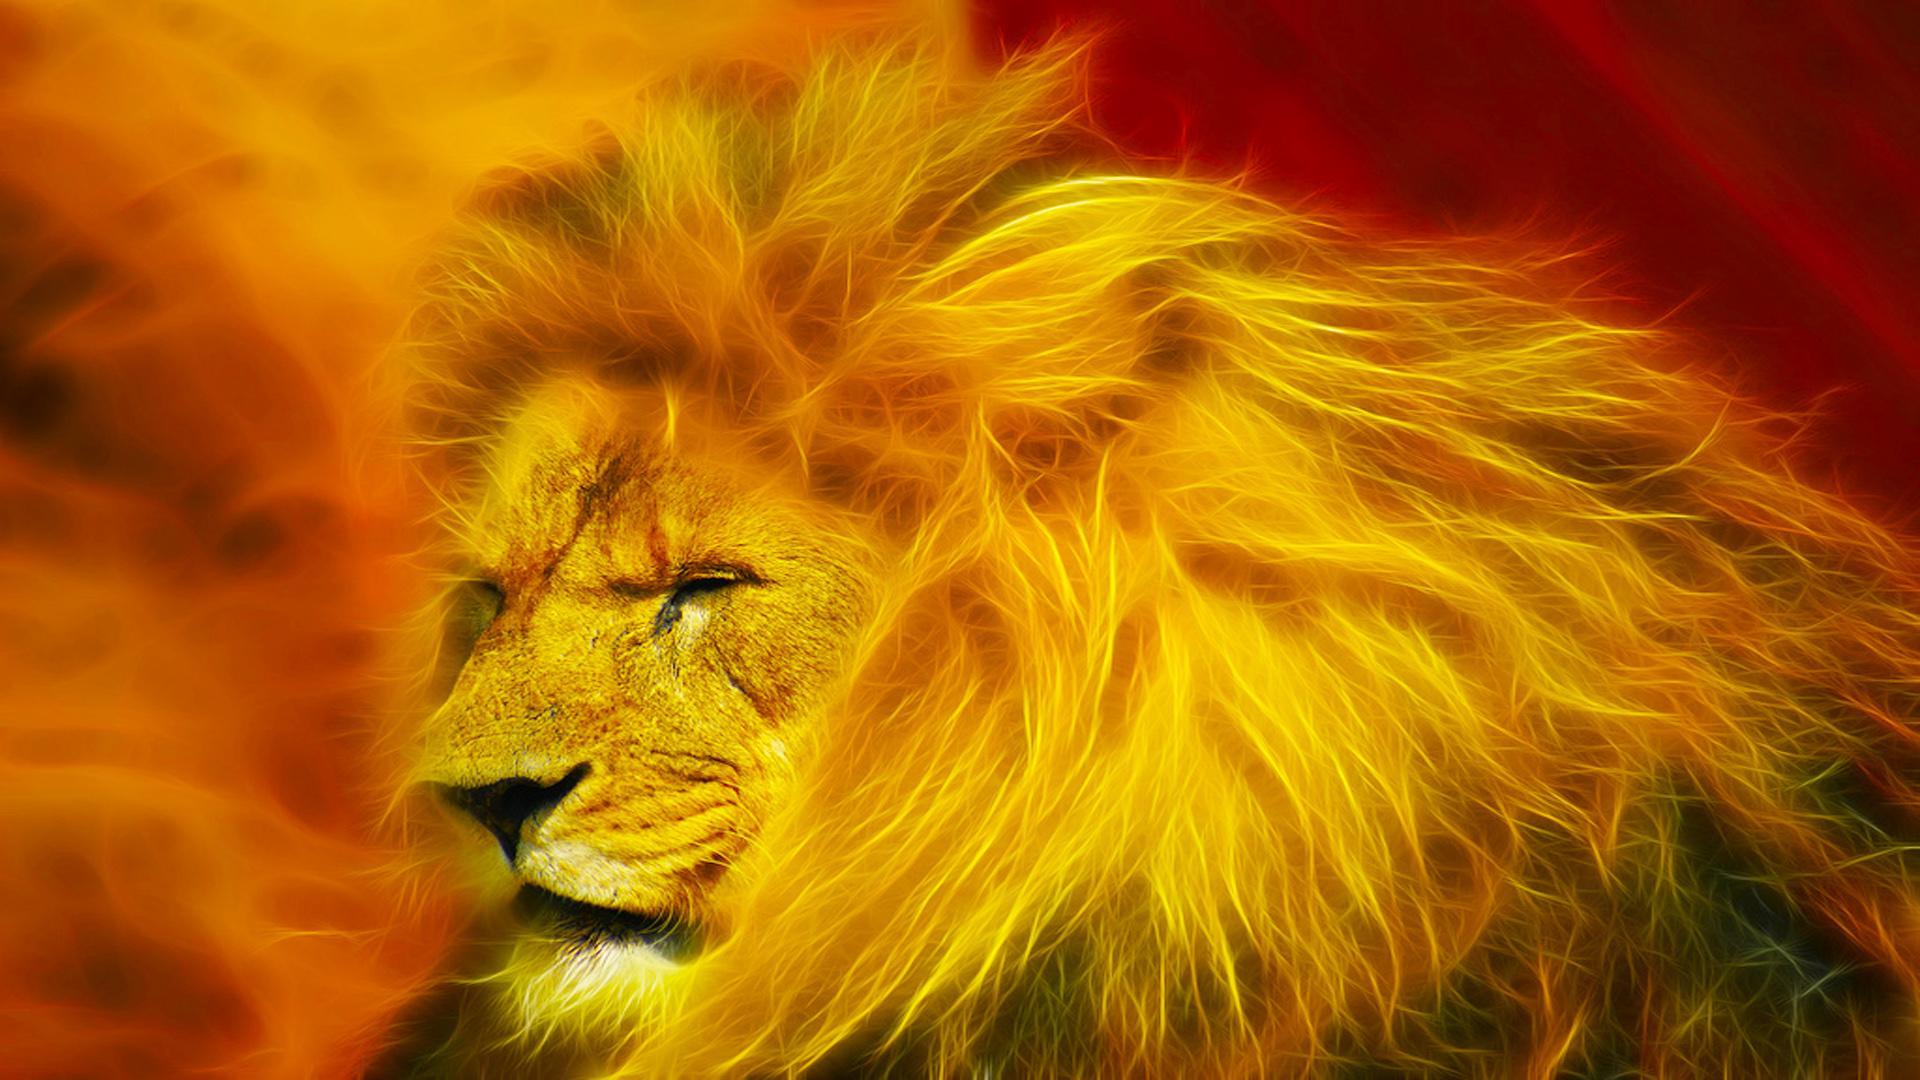 Beautiful Lion Wallpaper for Desktop Background 1920x1080